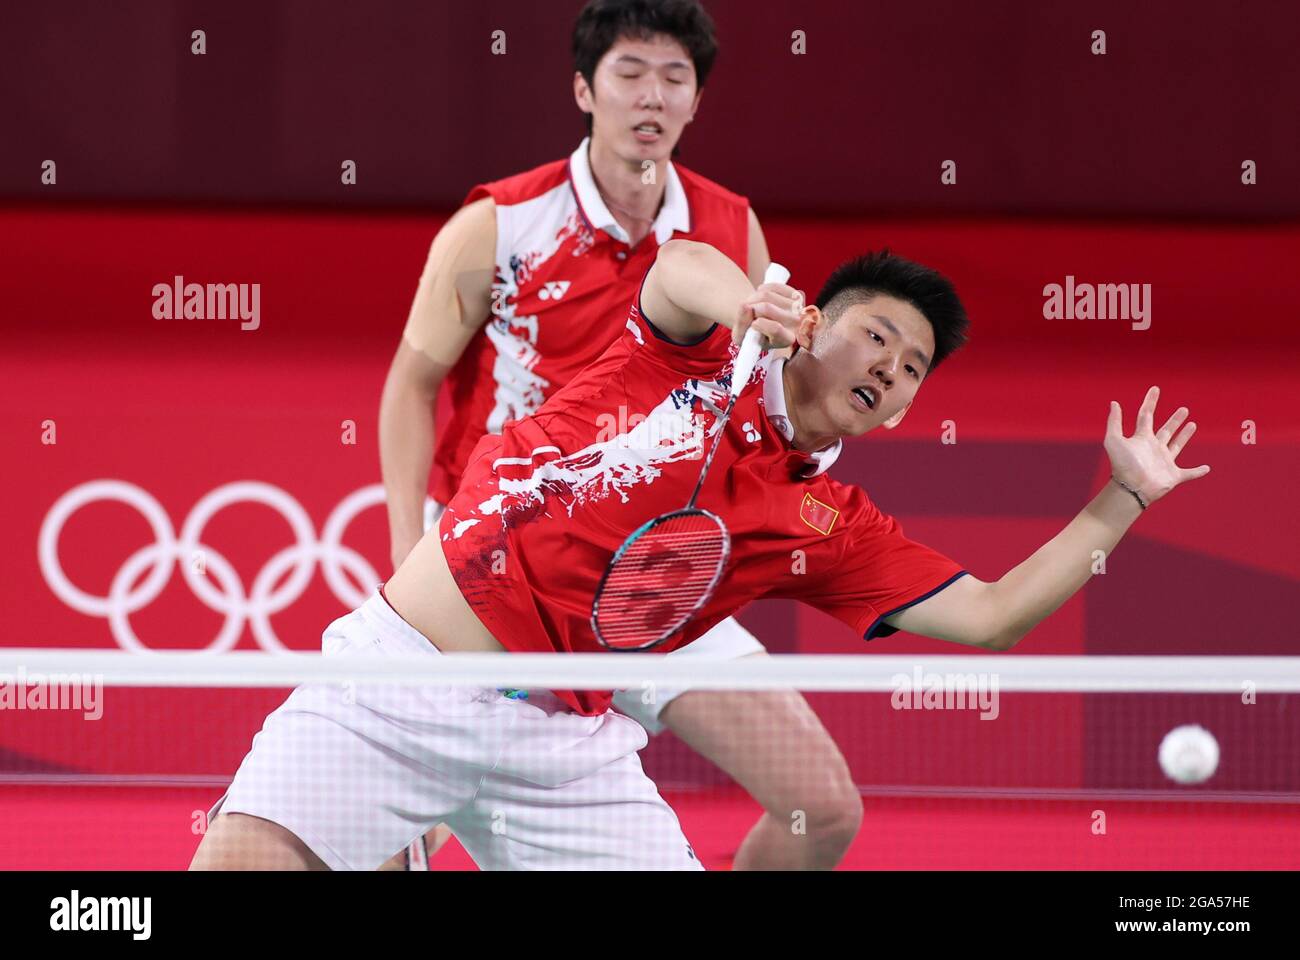 Tokyo, Japan. 29th July, 2021. Liu Yuchen (front) and Li Junhui of China  compete during the Tokyo 2020 men's doubles quarterfinal of badminton in  Tokyo, Japan, July 29, 2021. Credit: Yang Lei/Xinhua/Alamy